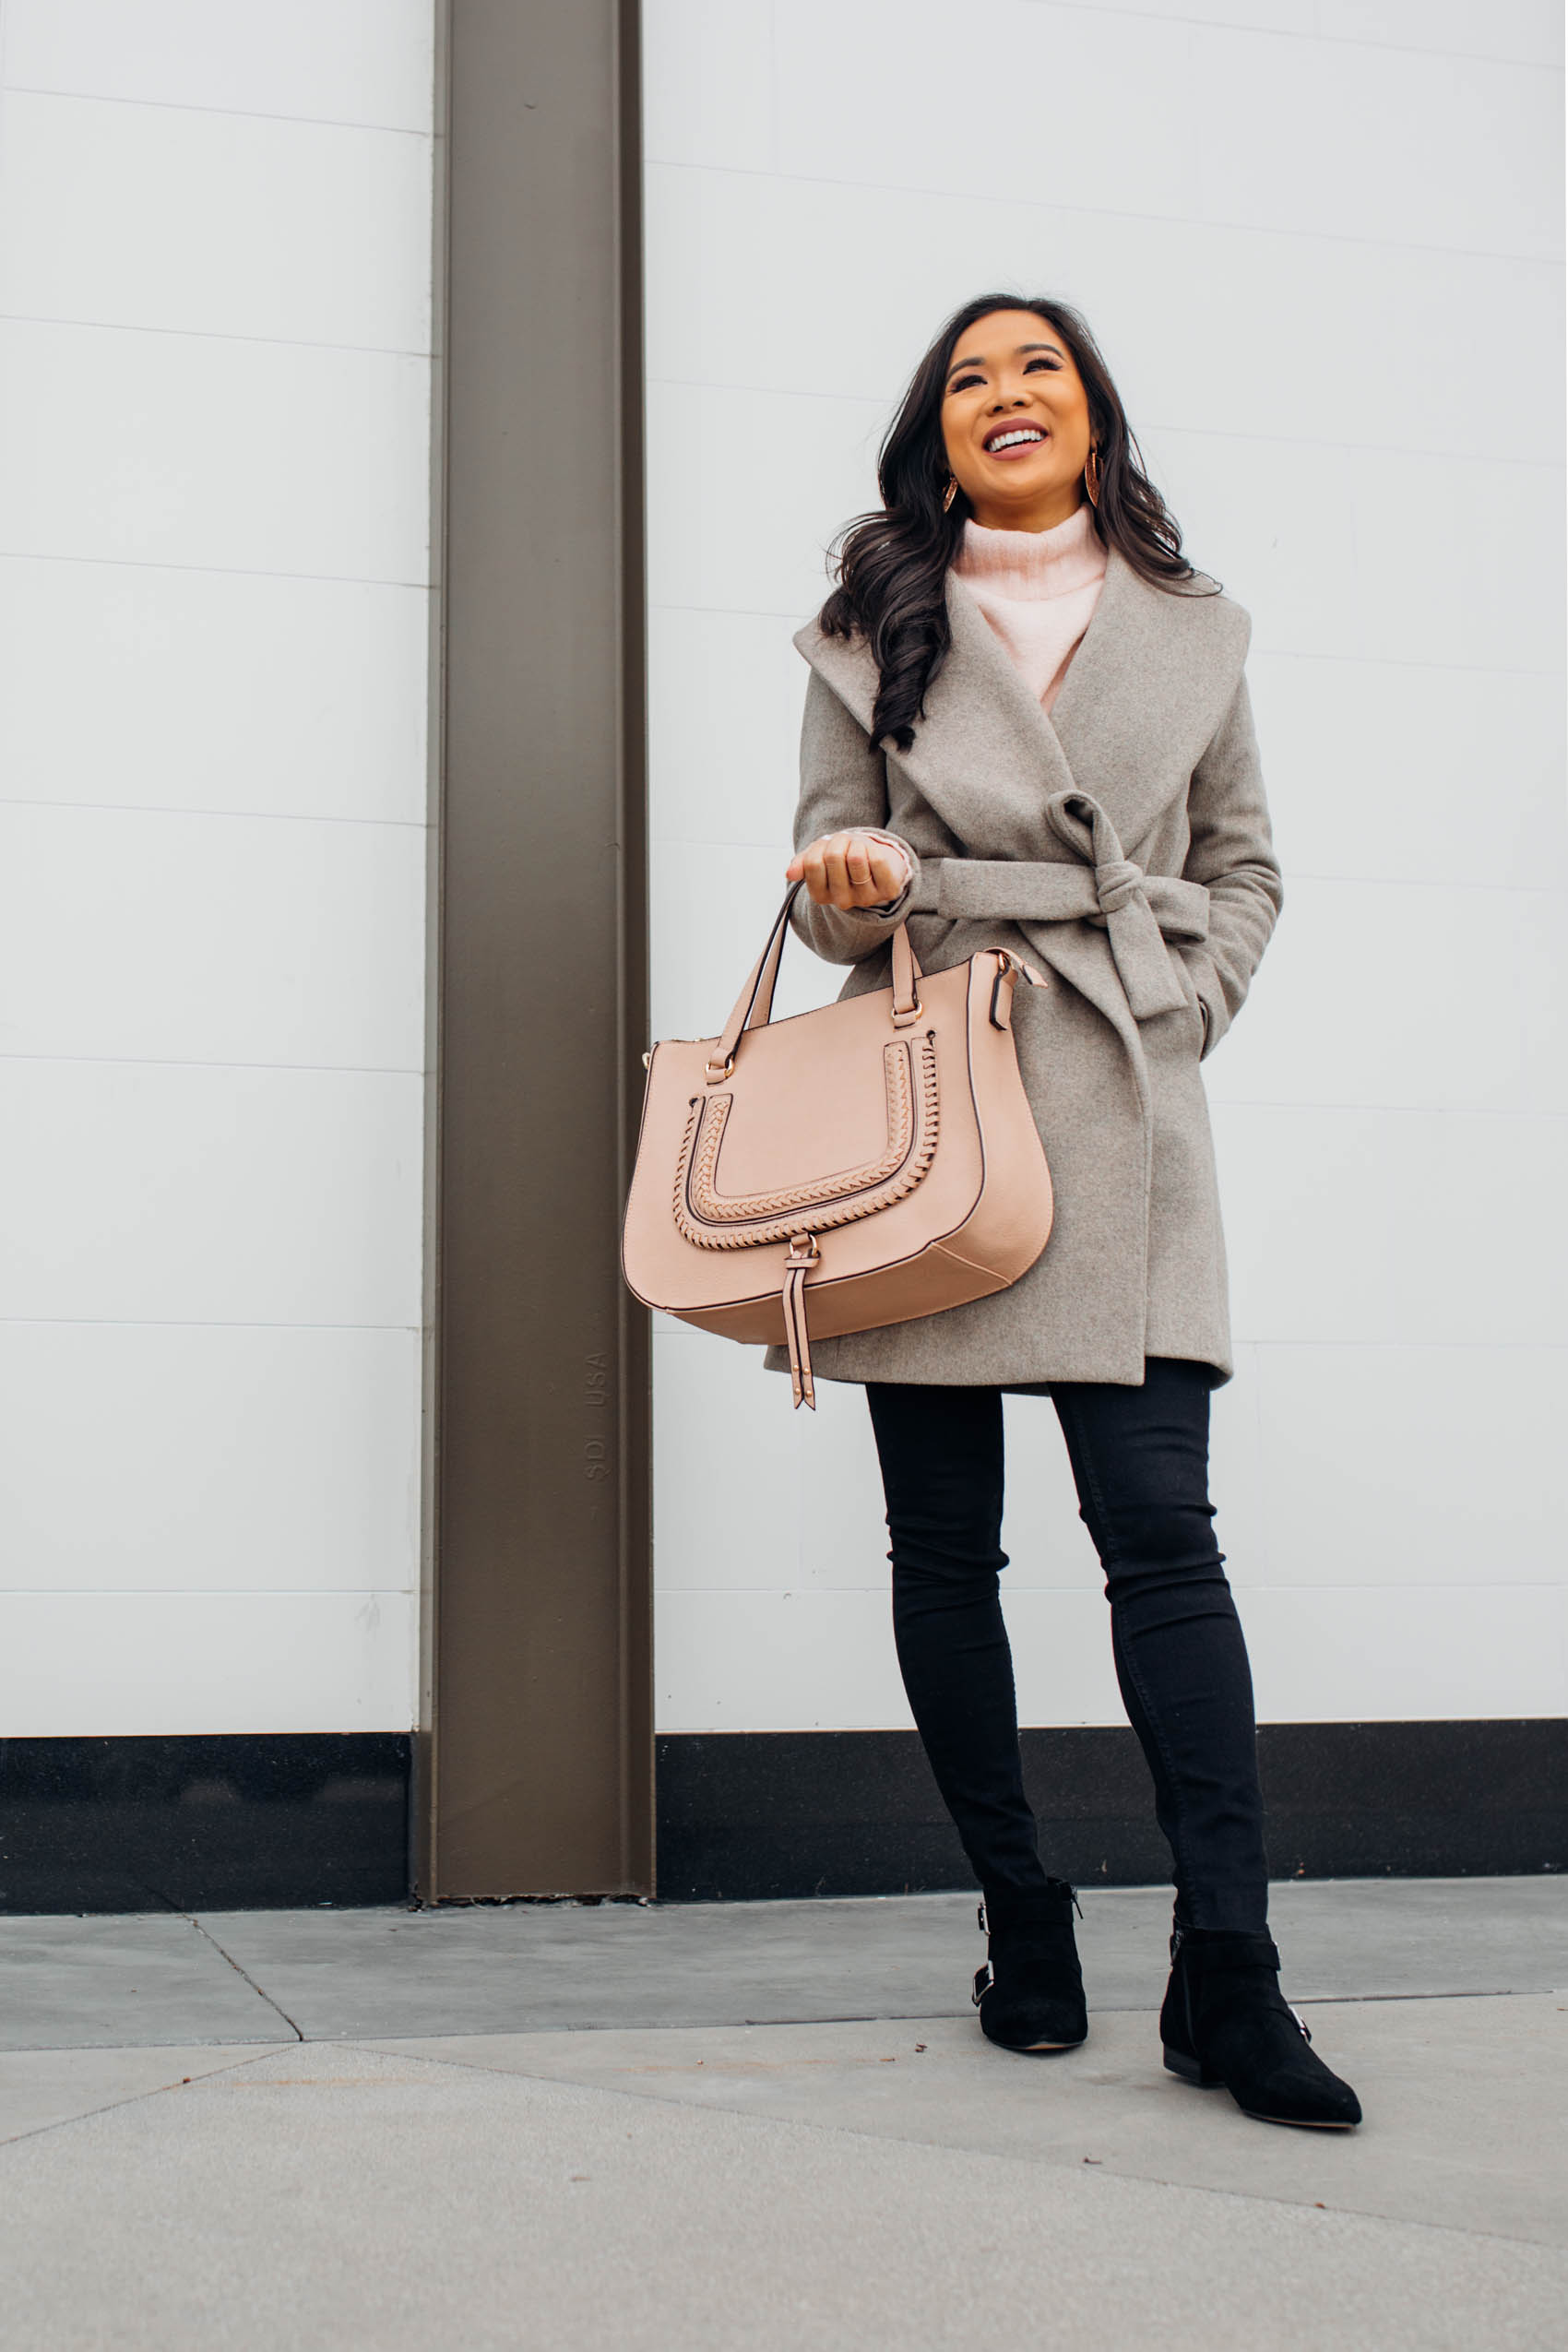 Blogger Hoang-Kim shares a winter outfit idea with an Ann Taylor wool wrap coat and blush handbag